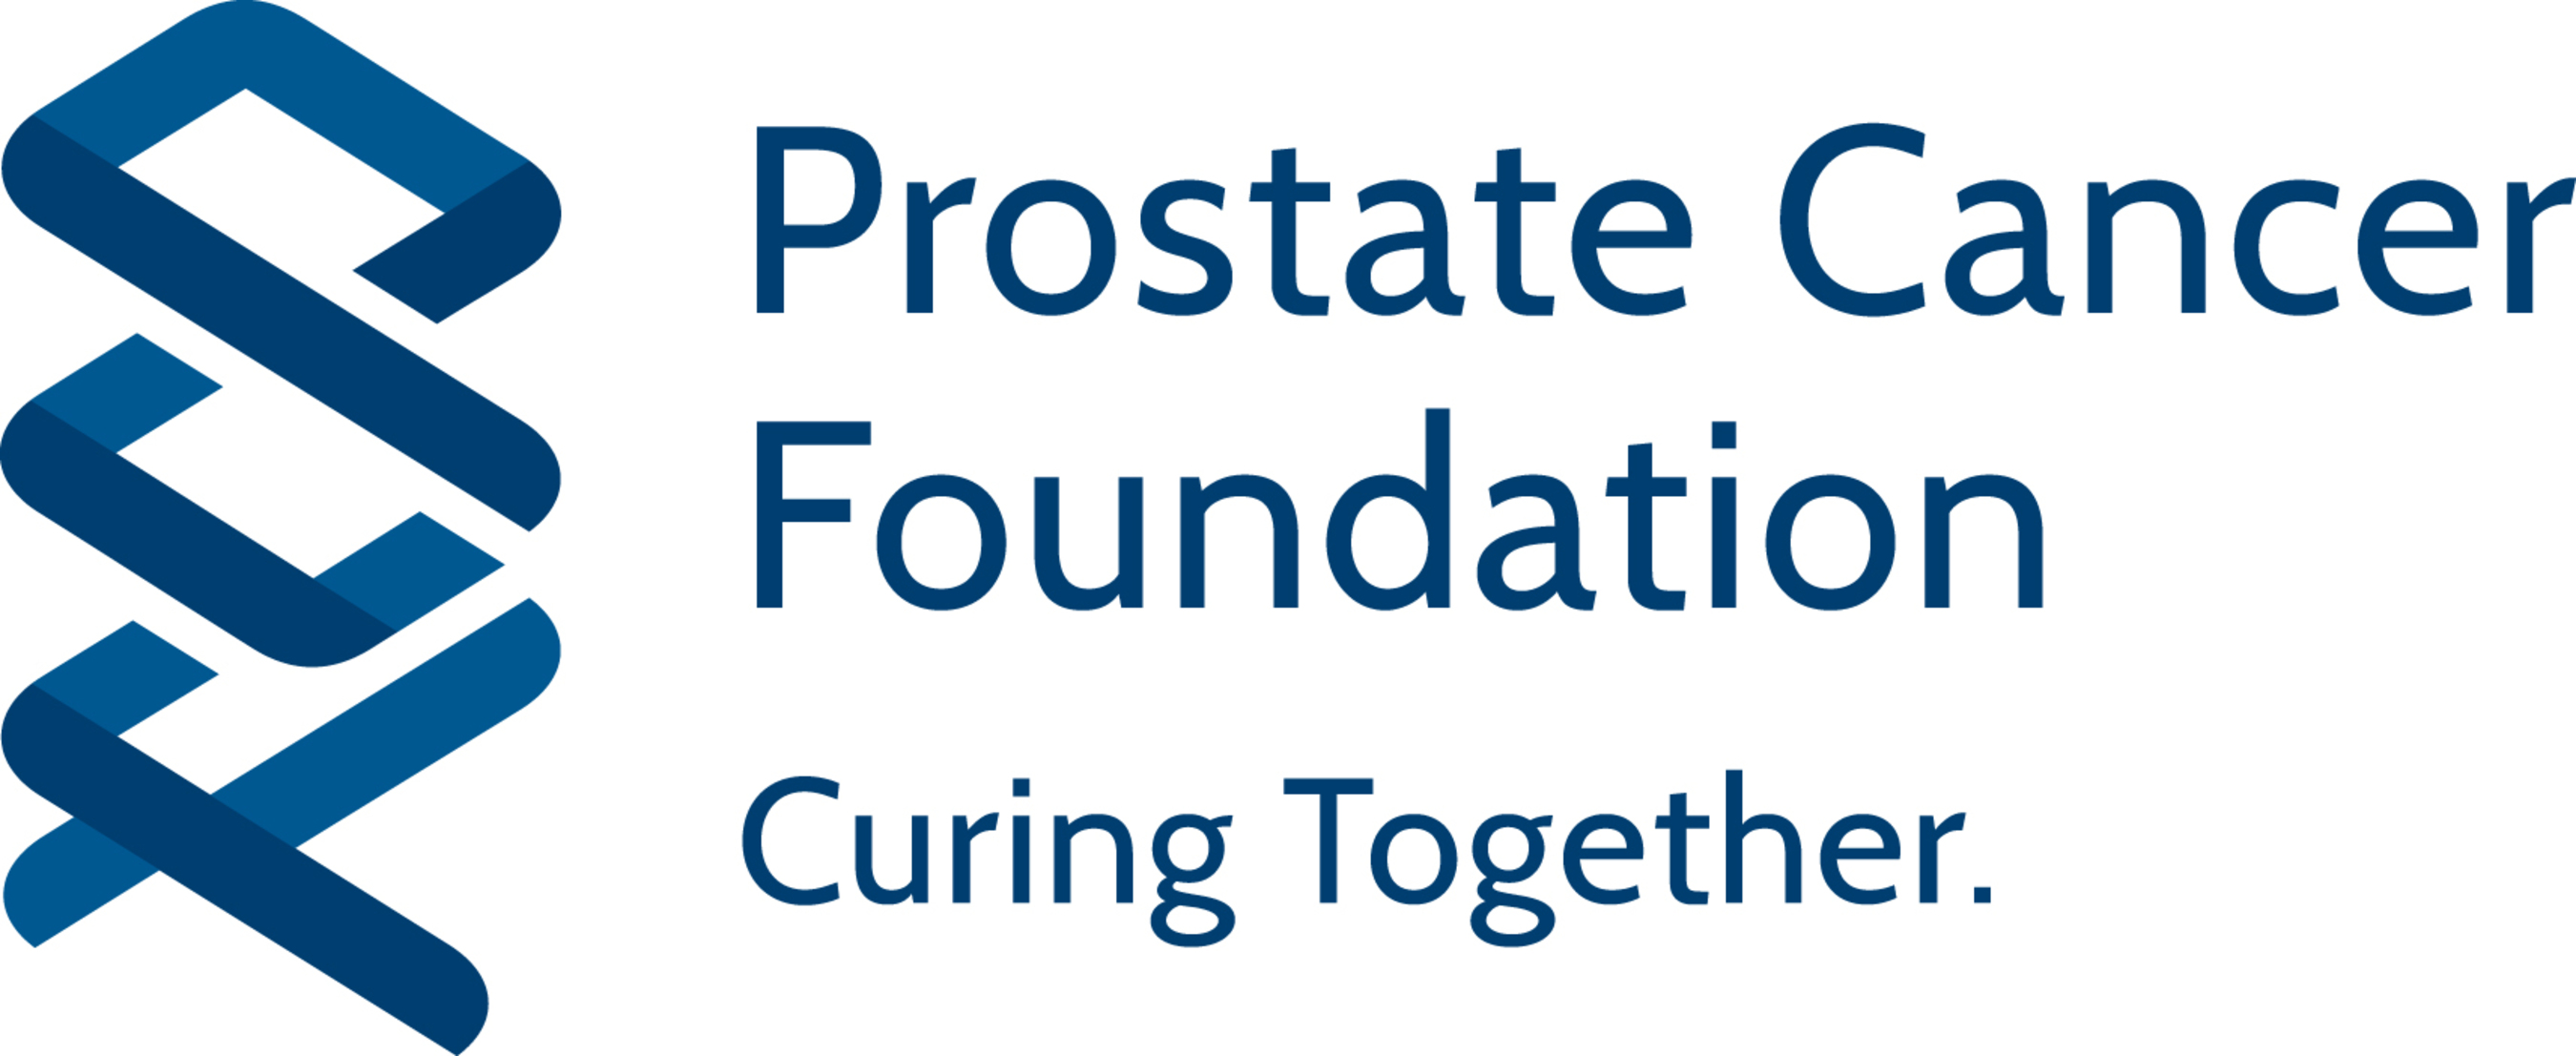 Get checked. Visit pcf.org. (PRNewsFoto/Prostate Cancer Foundation) (PRNewsFoto/Prostate Cancer Foundation)